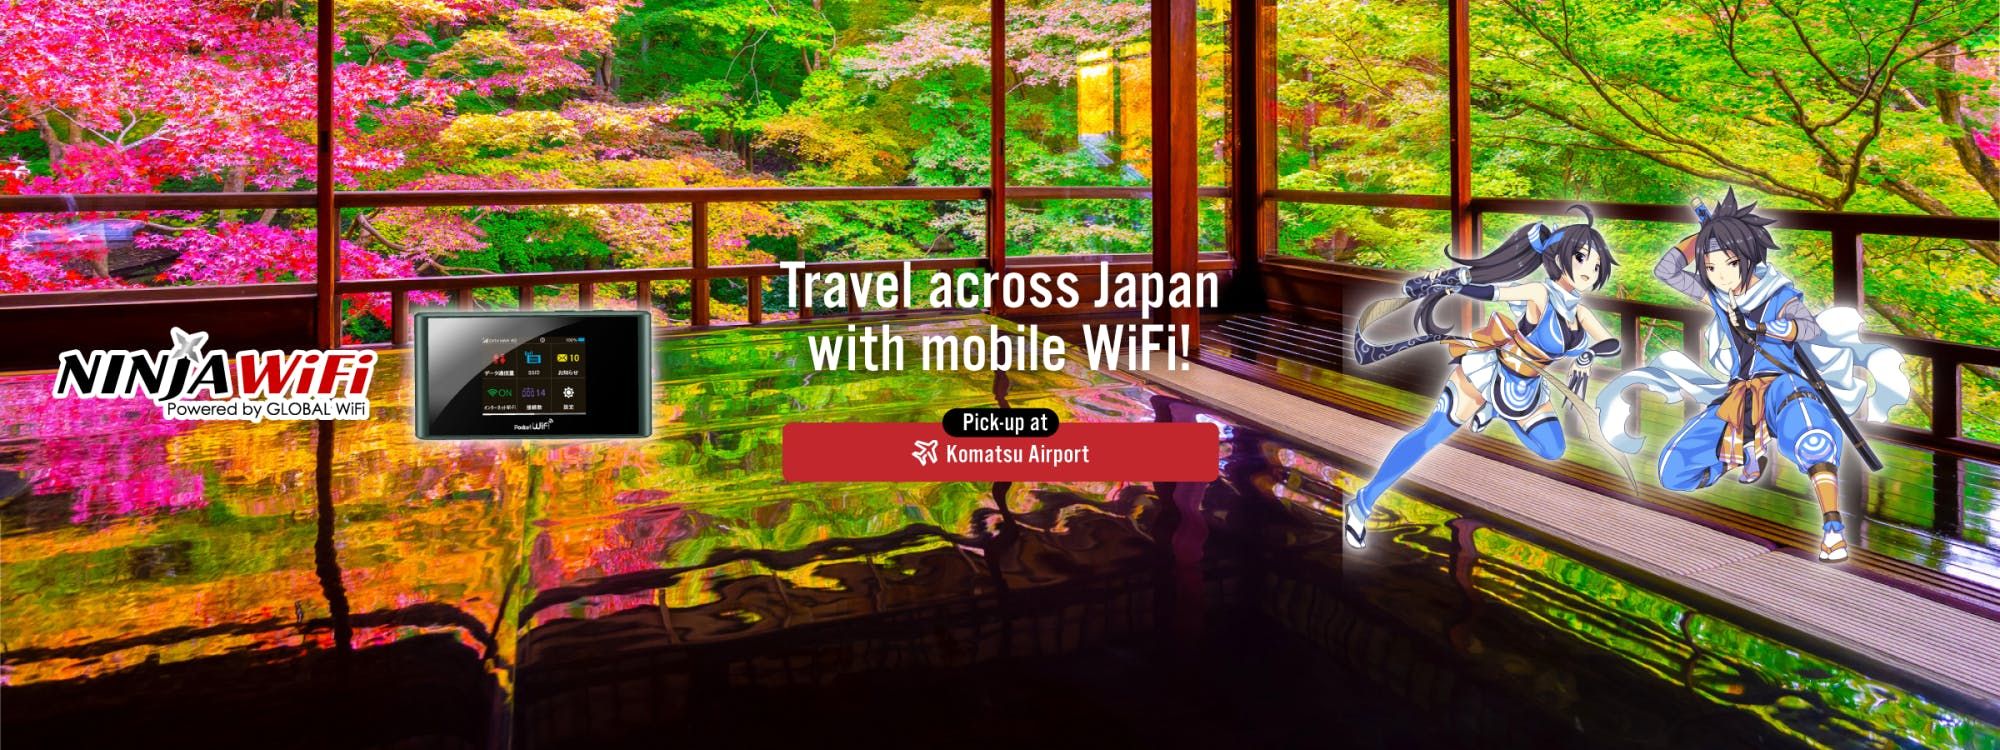 Imagen del tour: Alquiler de WiFi móvil - Aeropuerto de Komatsu